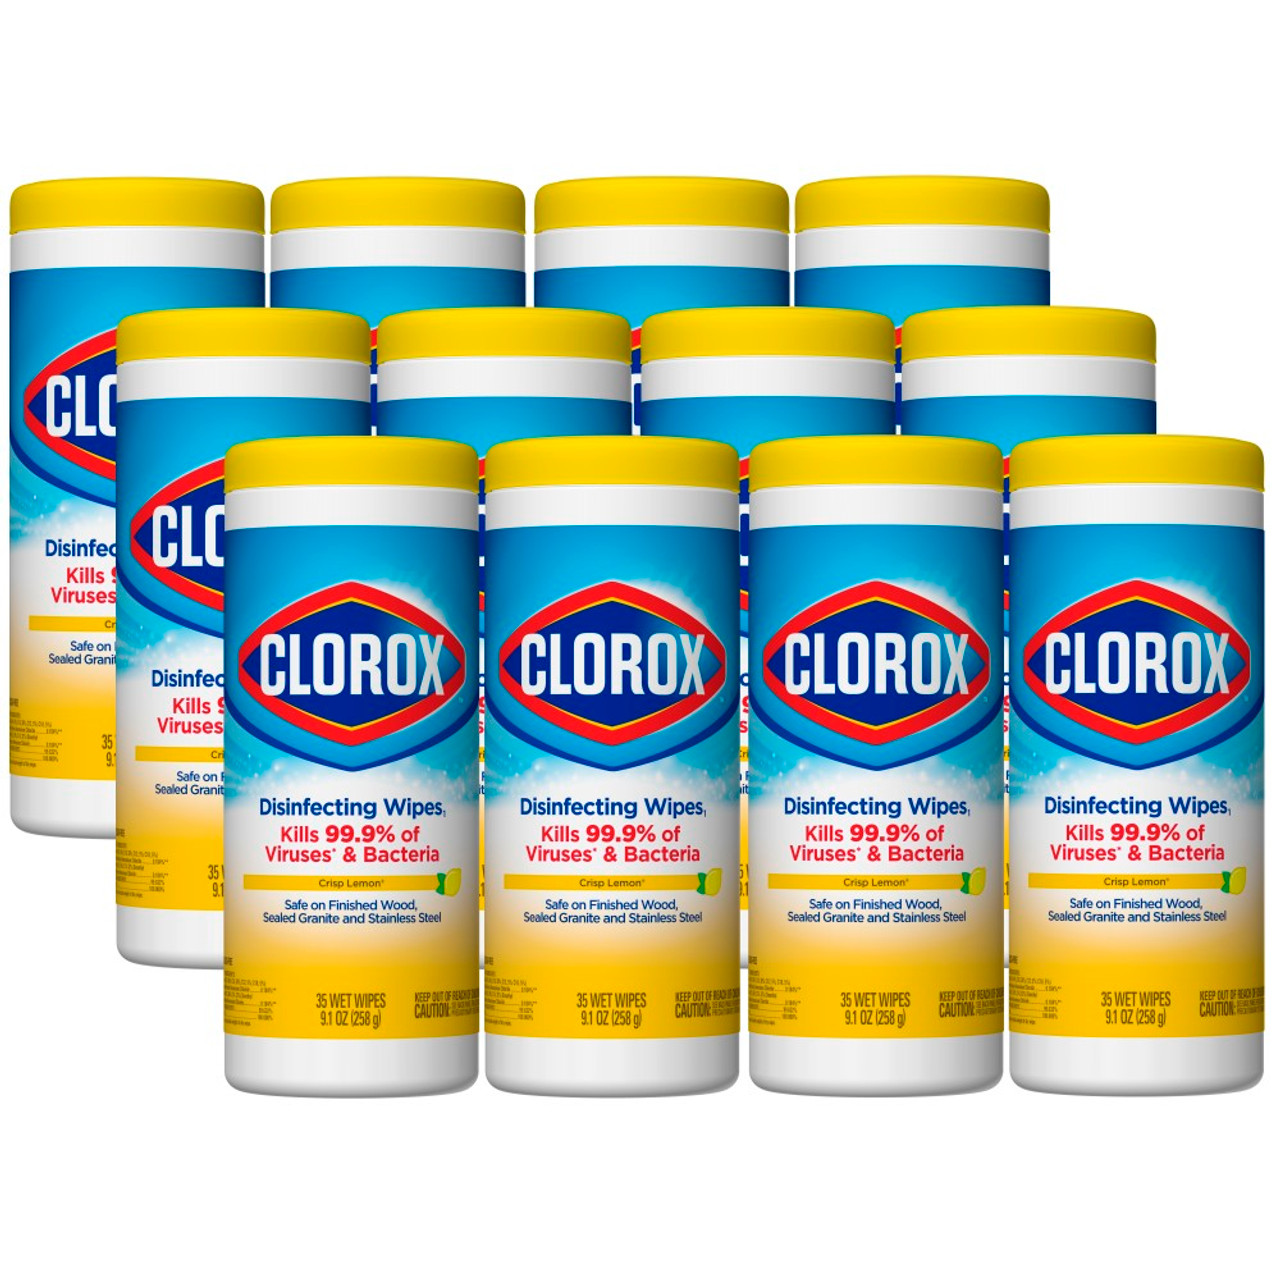 Clorox Crisp Lemon Disinfecting Cleaning Wipes Tub (75-Count